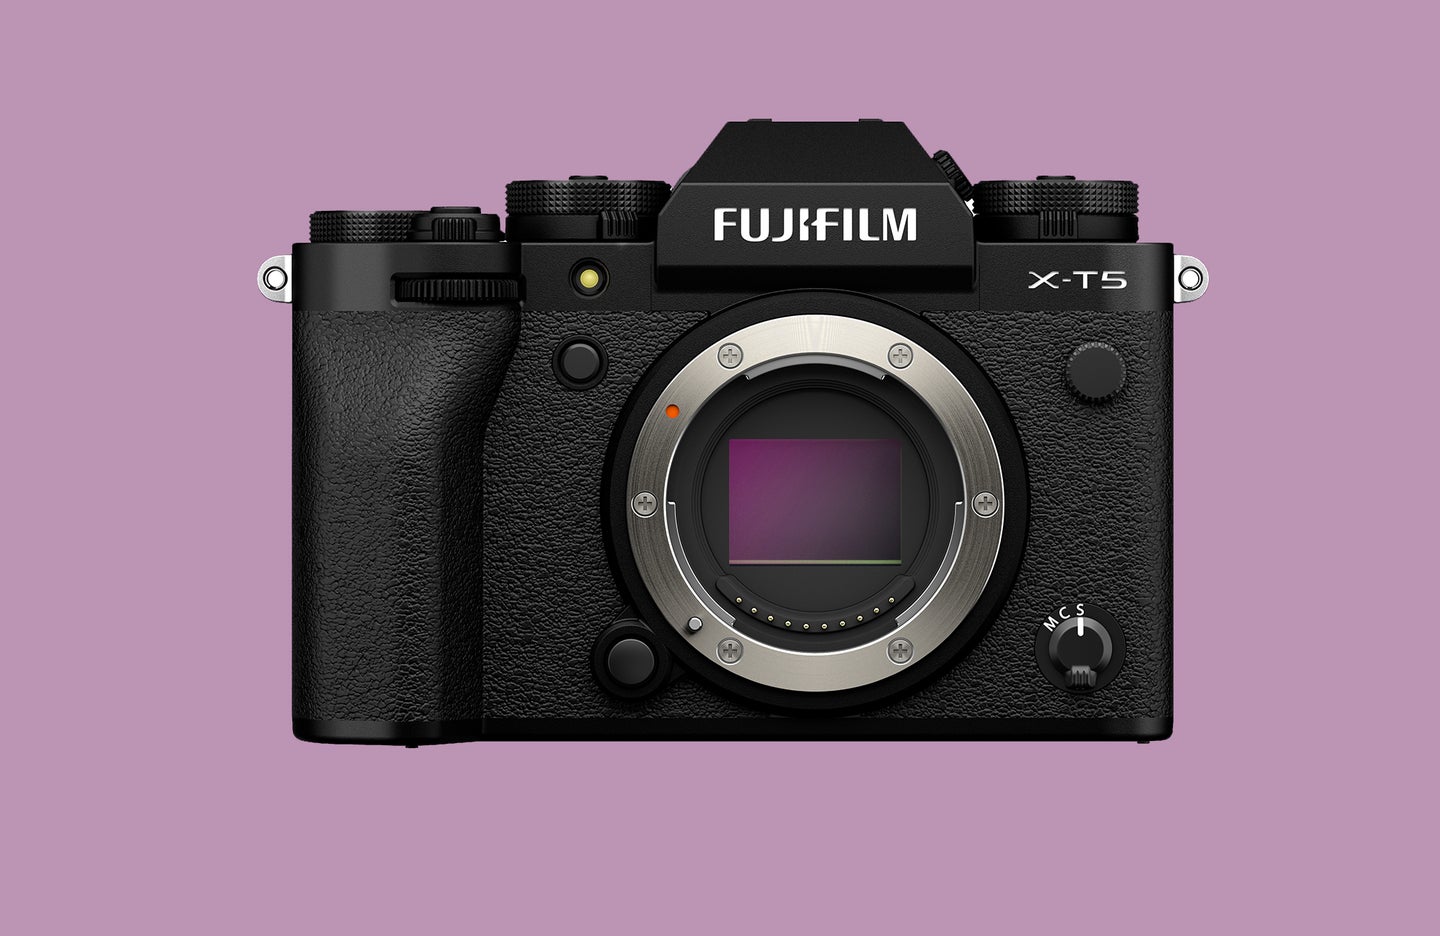 Fujifilm has announced the new X-T5.